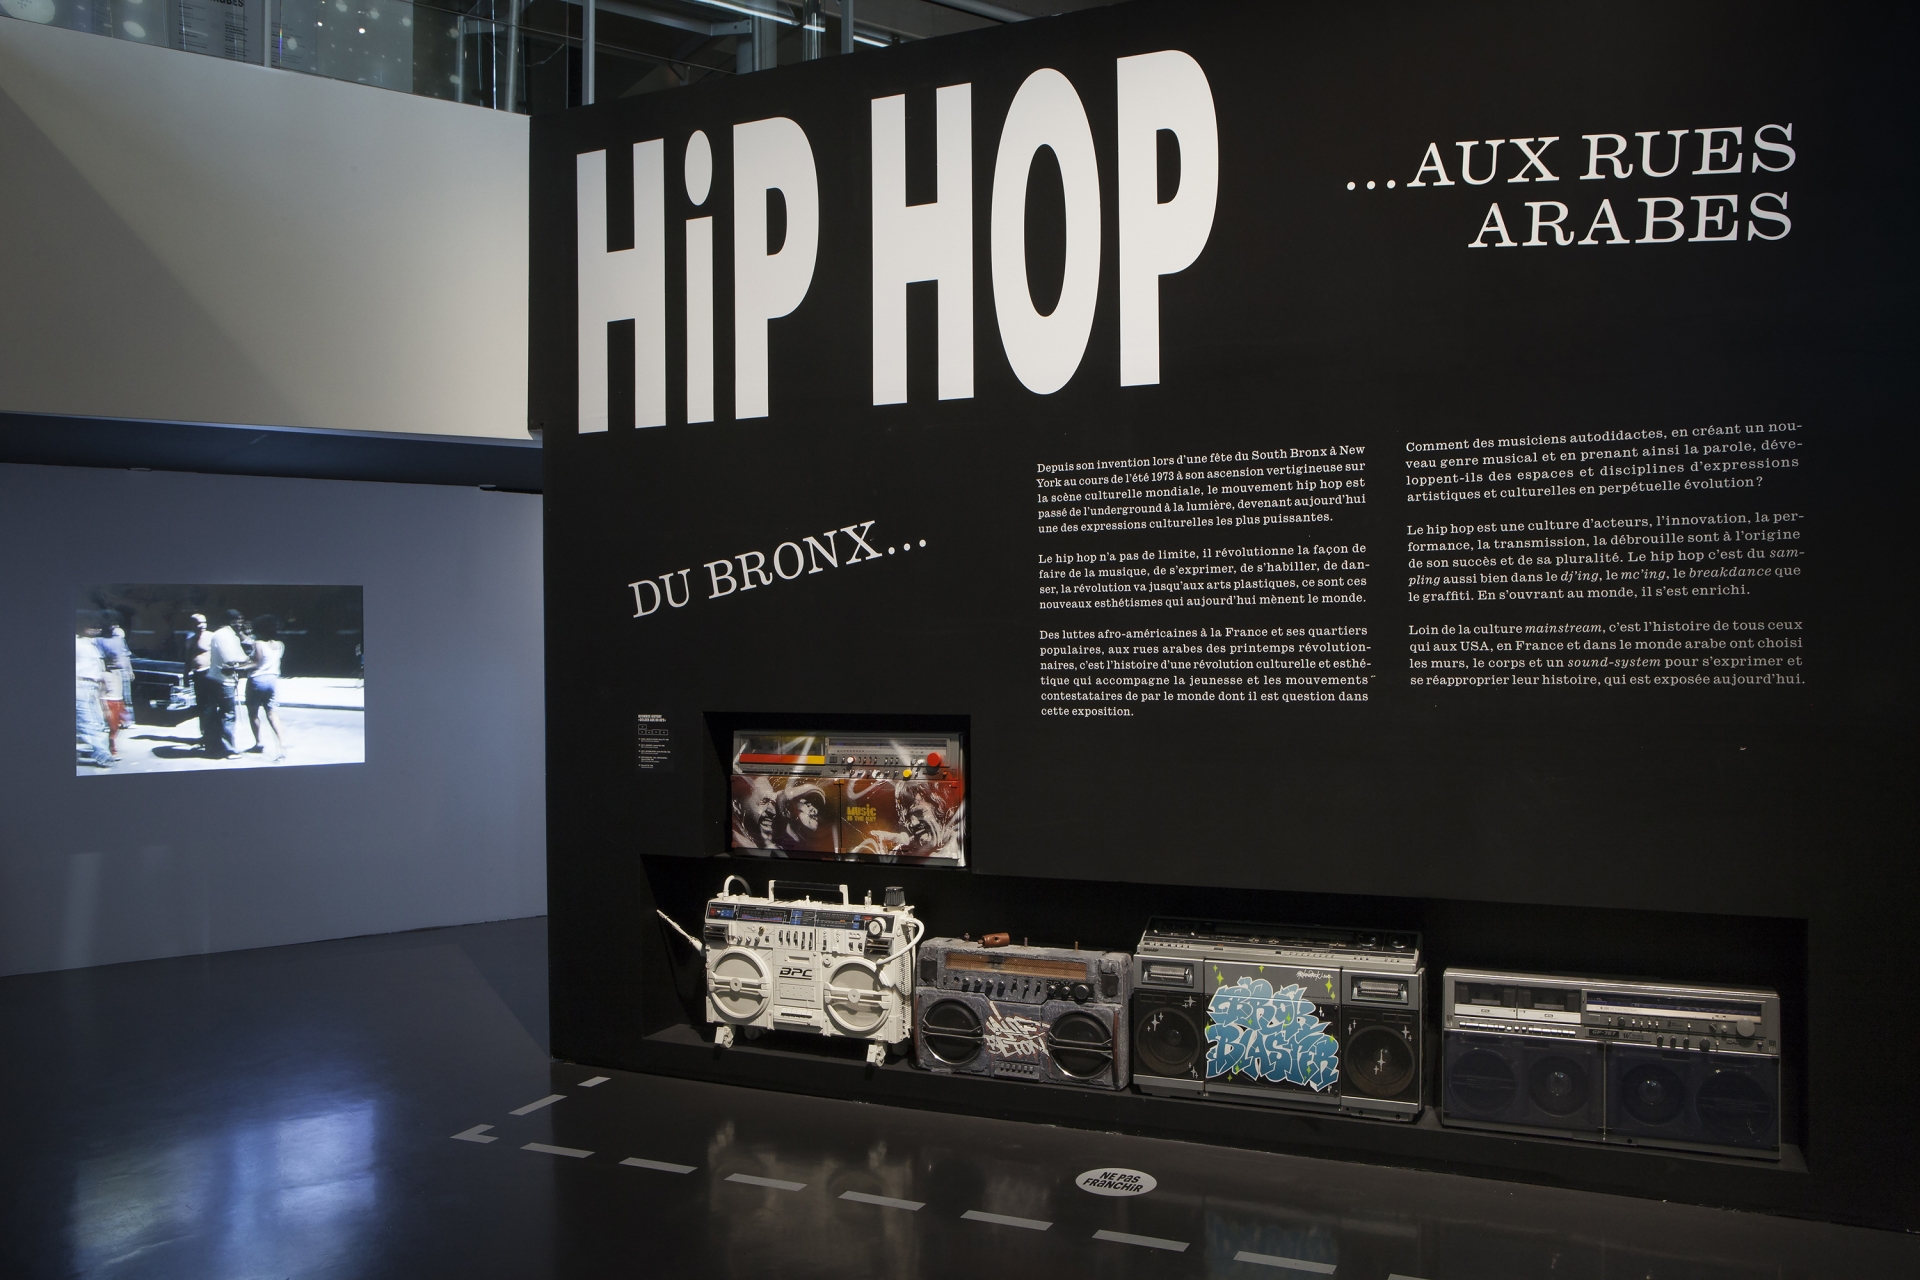 aura-studio-hip-hop-du-bronx-aux-rues-arabes_hiphop_03.jpg